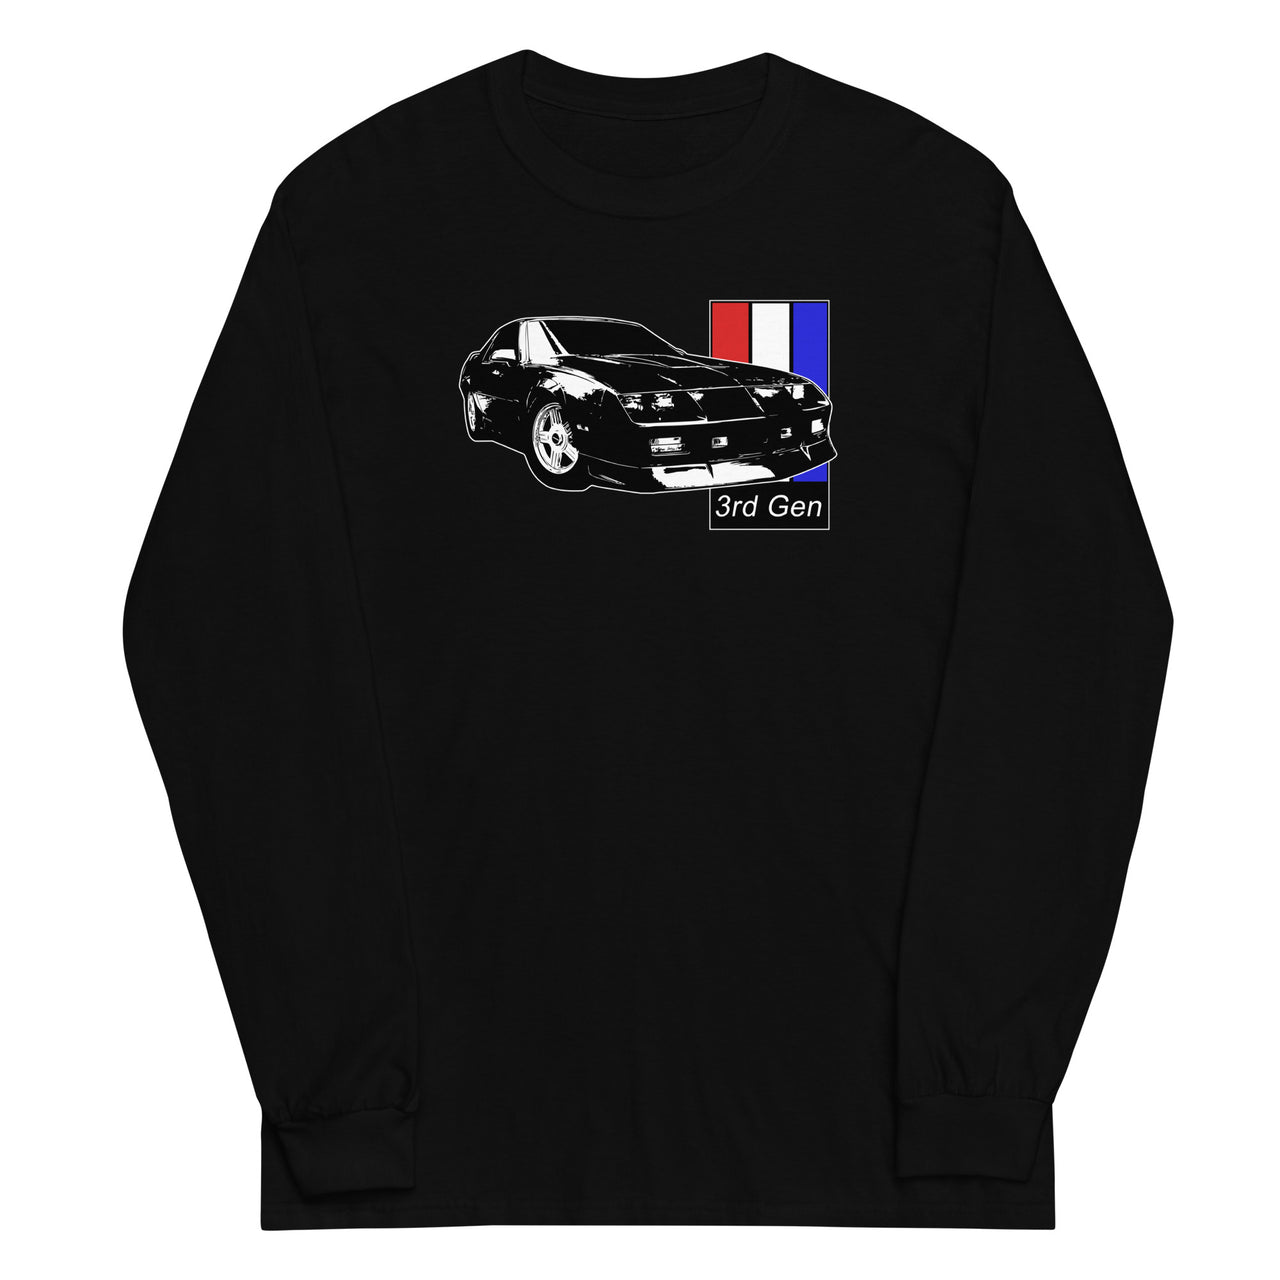 3rd Gen Camaro Long Sleeve Shirt in black